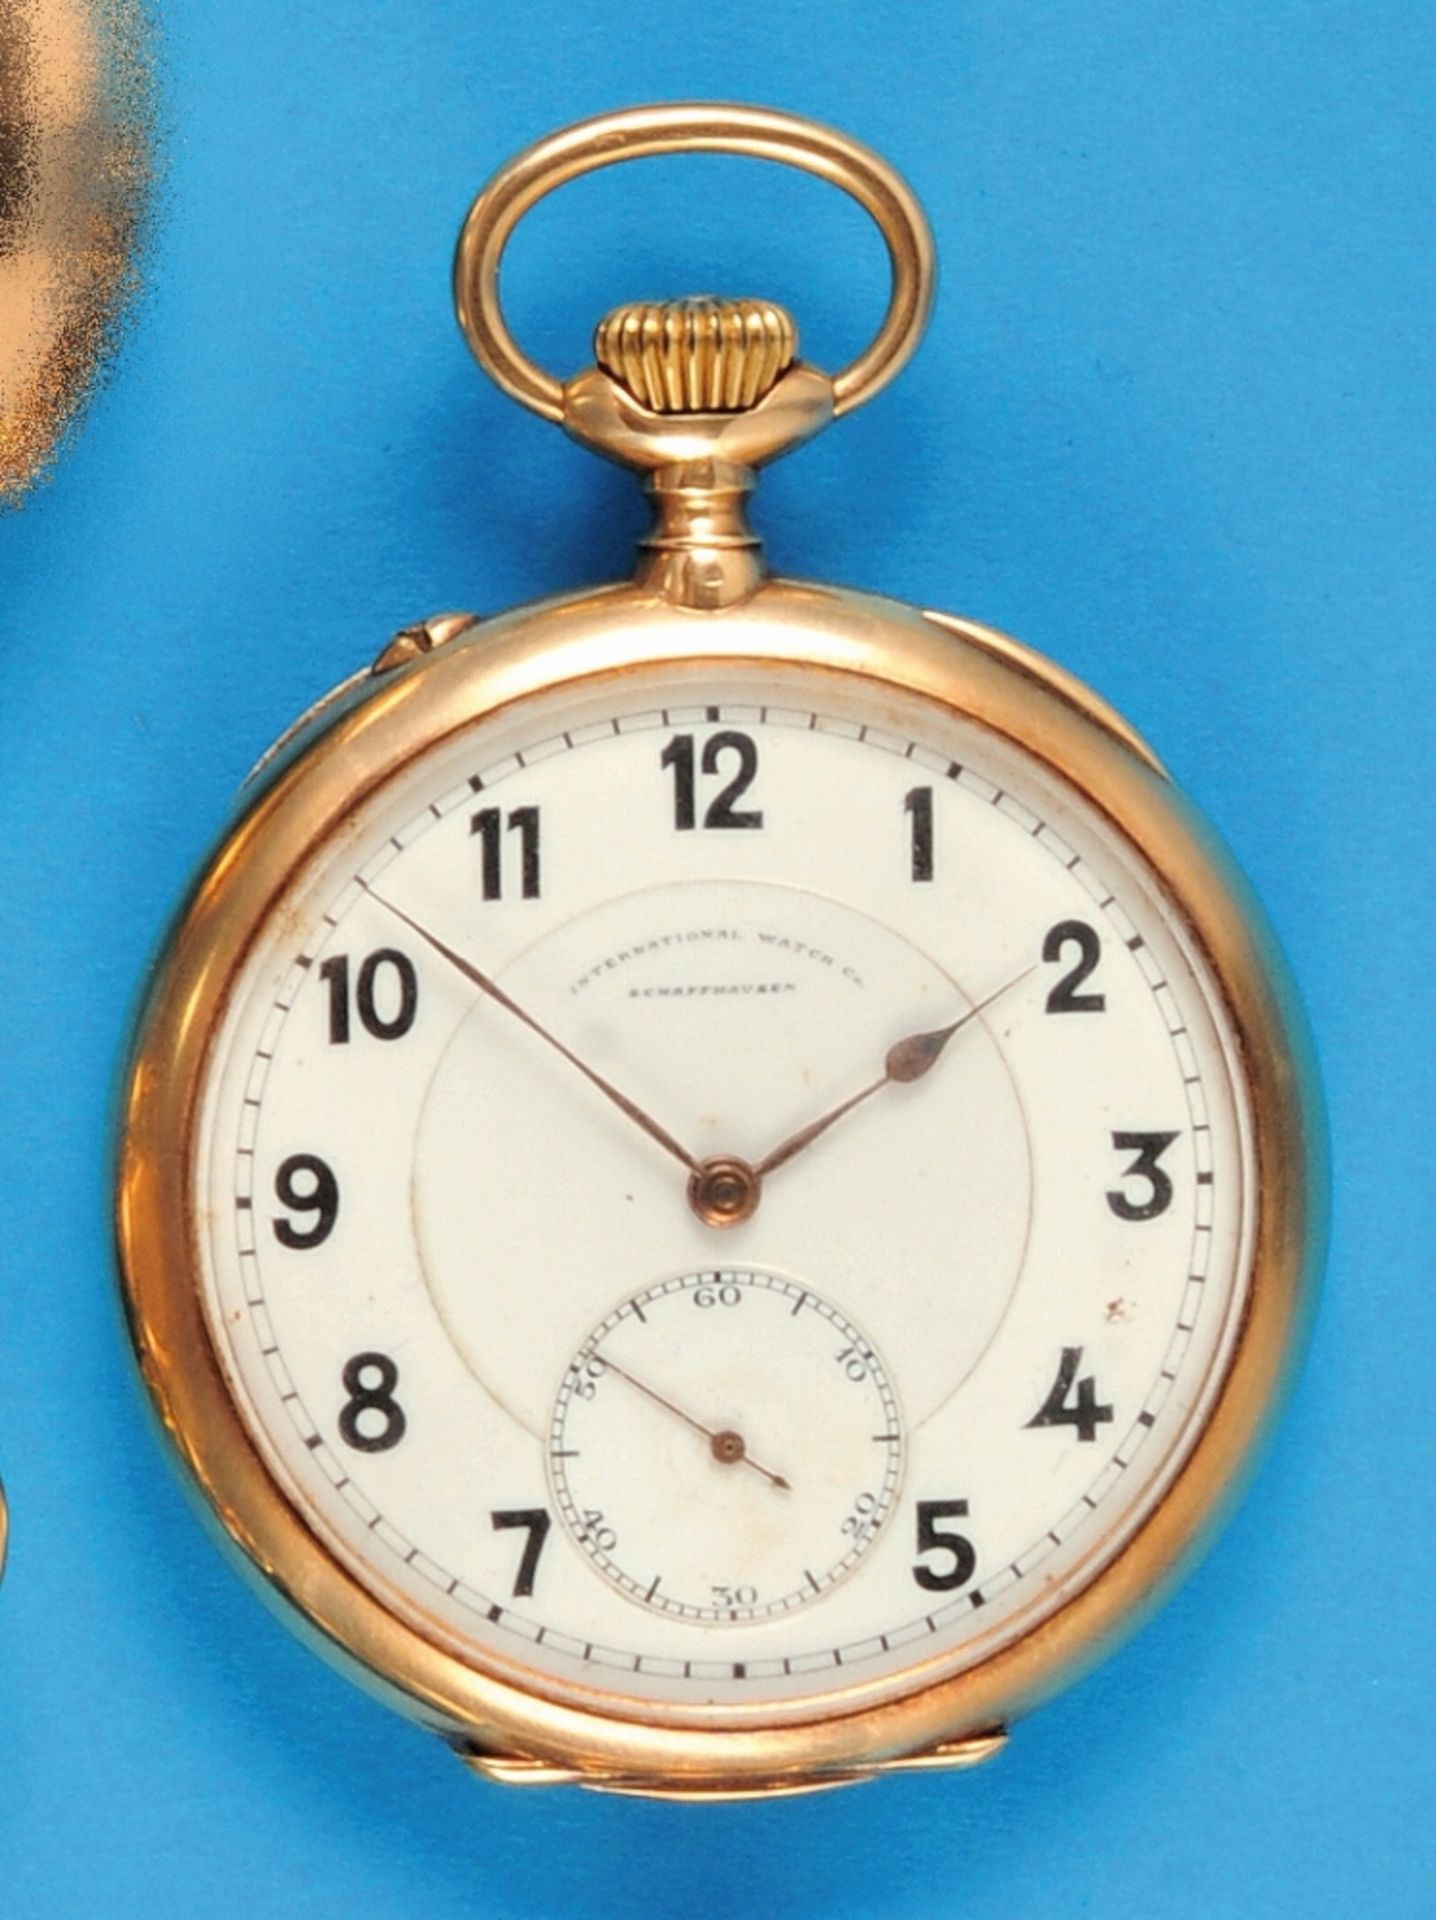 IWC, International Watch Co., Schaffhausen, "Quality Extra", very rare gold pocket watch - Bild 2 aus 2